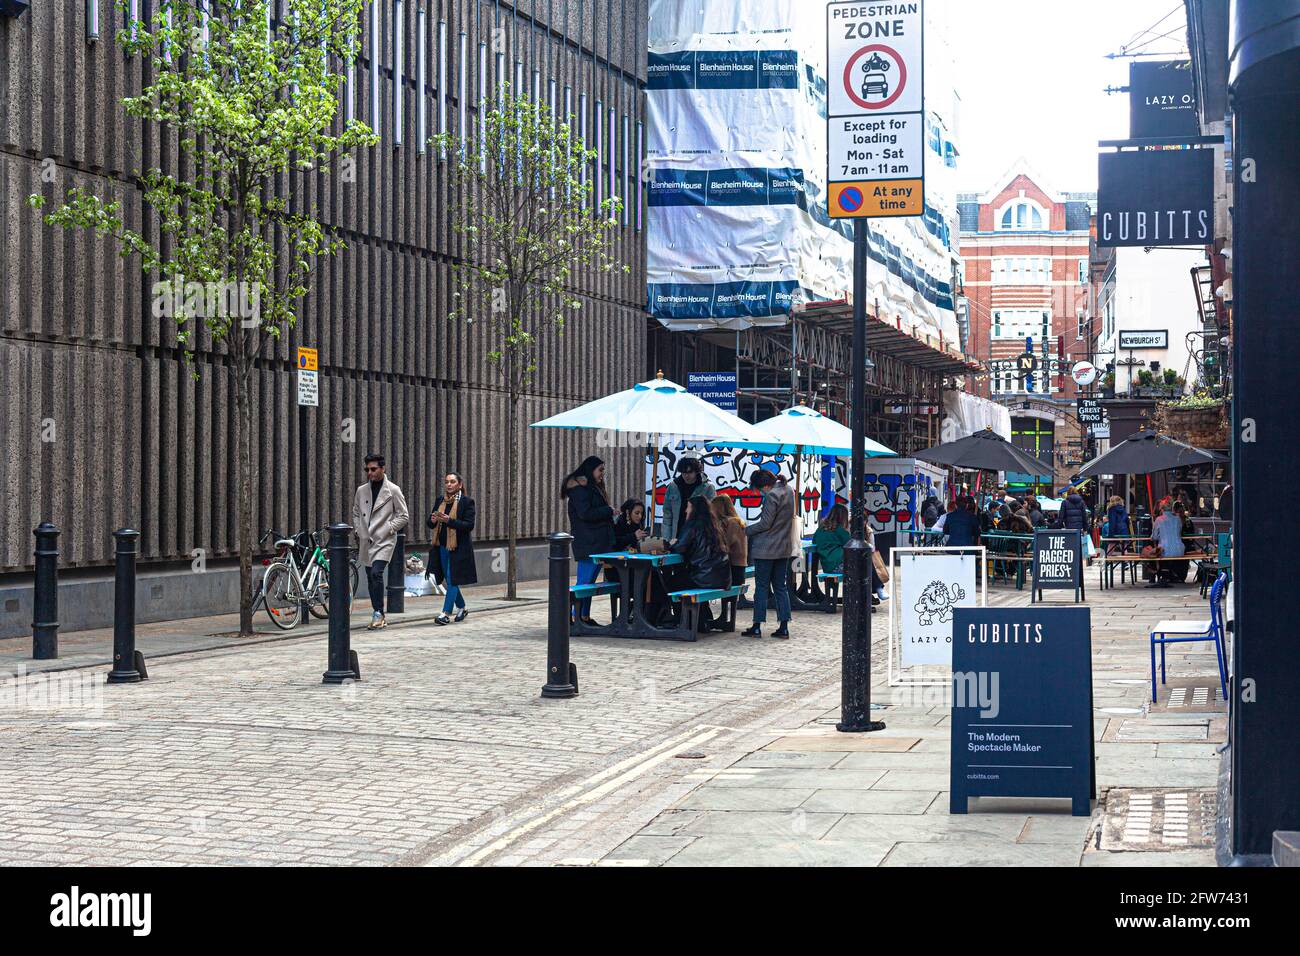 Pedestrian zone with traffic bollards, Ganton Street, Soho, London W1, England, UK. Stock Photo